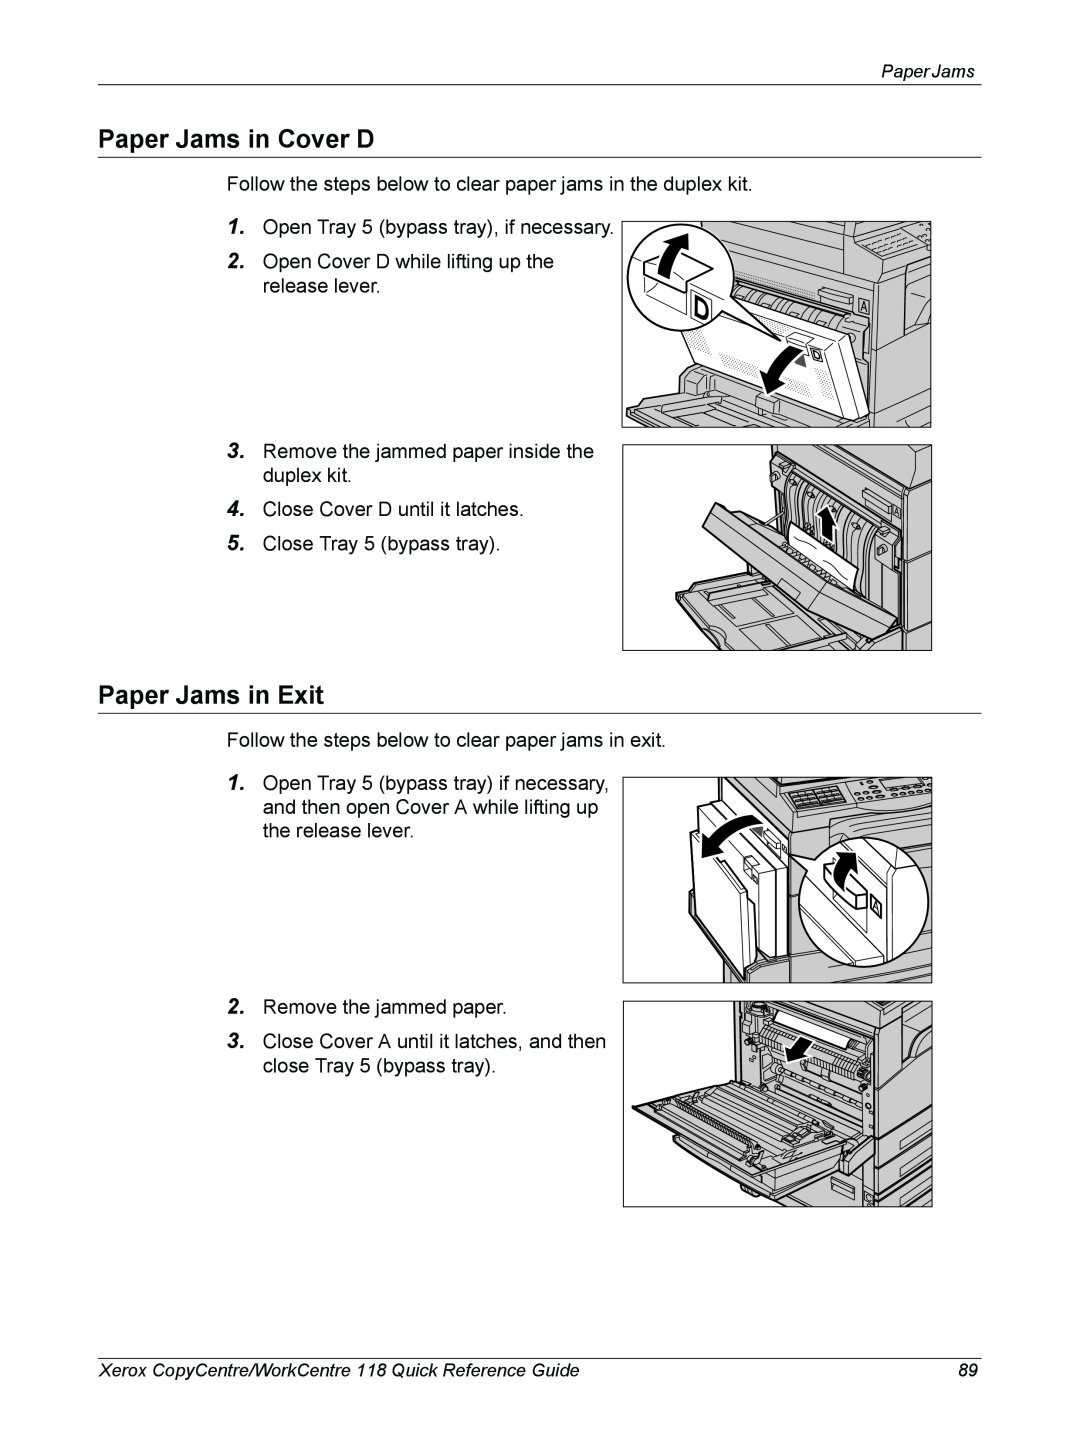 Xerox M118i, C118 manual Paper Jams in Cover D, Paper Jams in Exit 